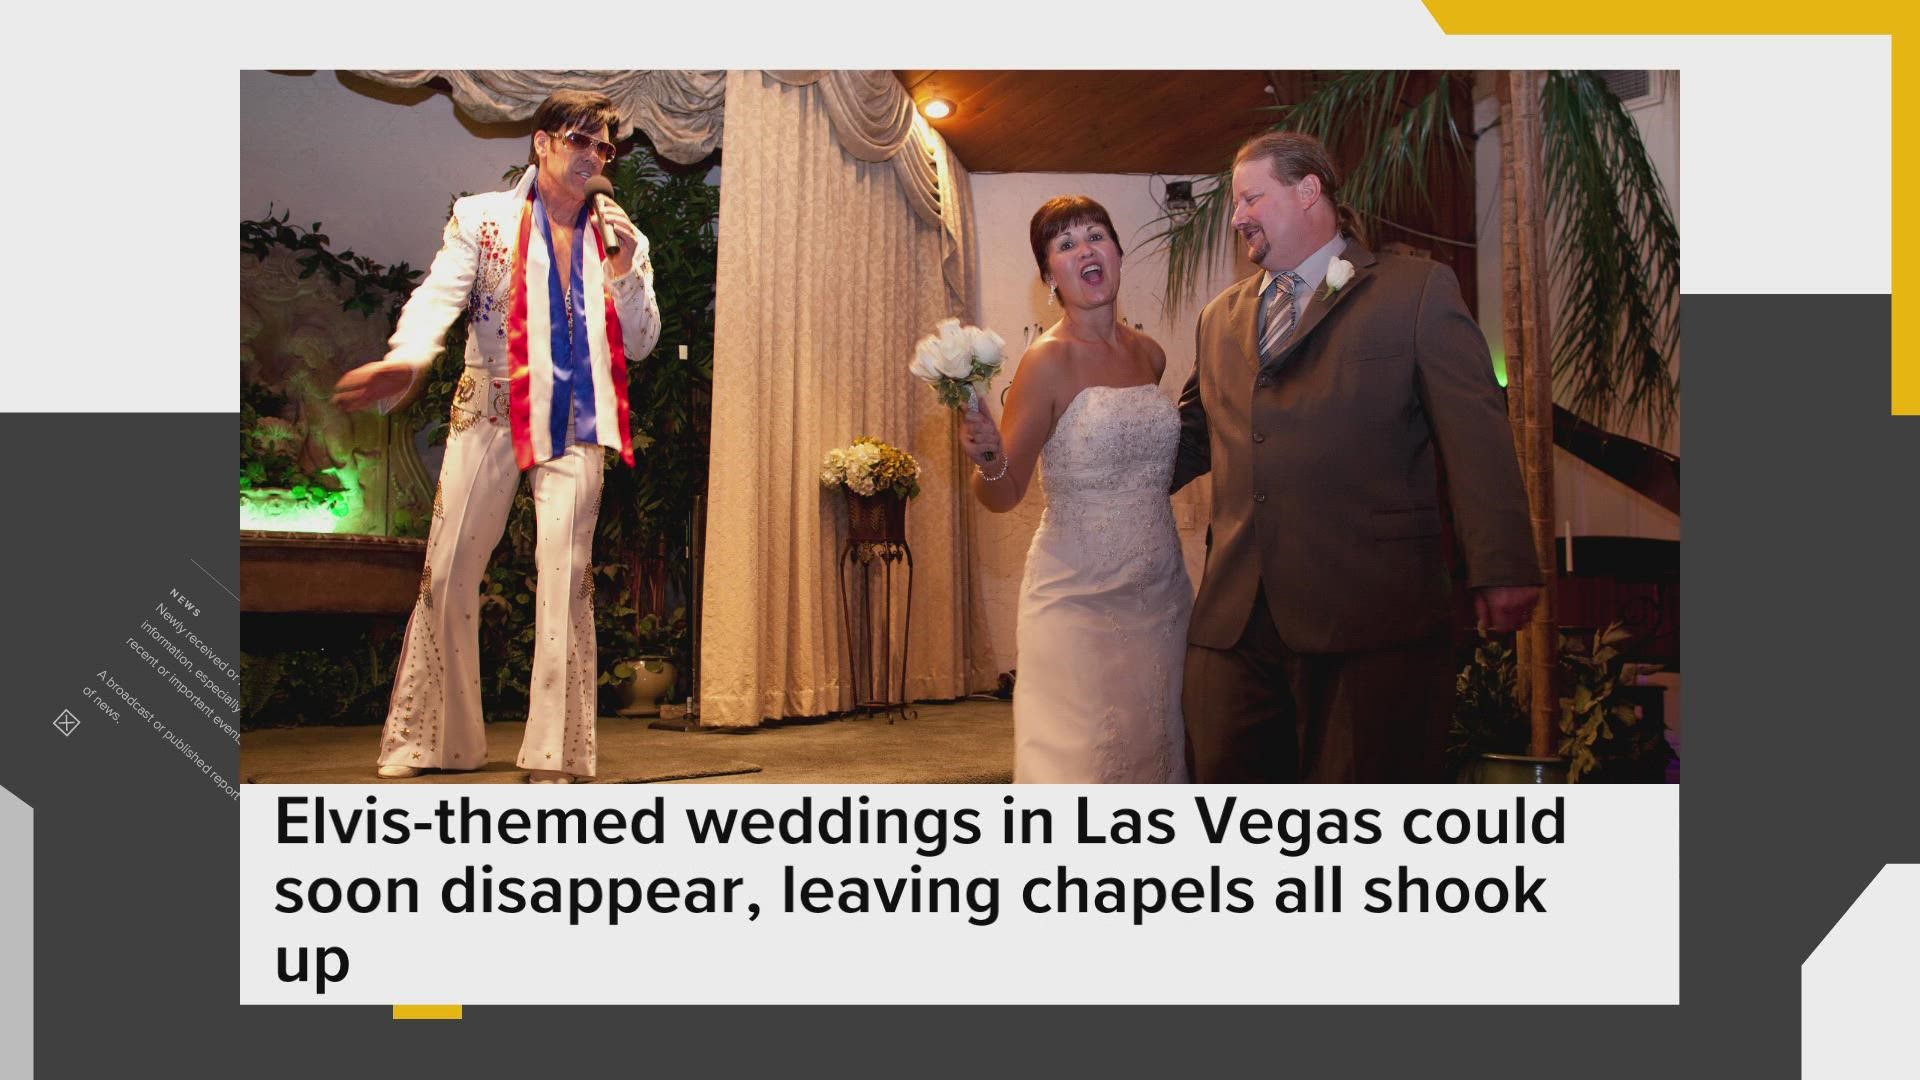 Company to Las Vegas chapels: No more Elvis-themed weddings